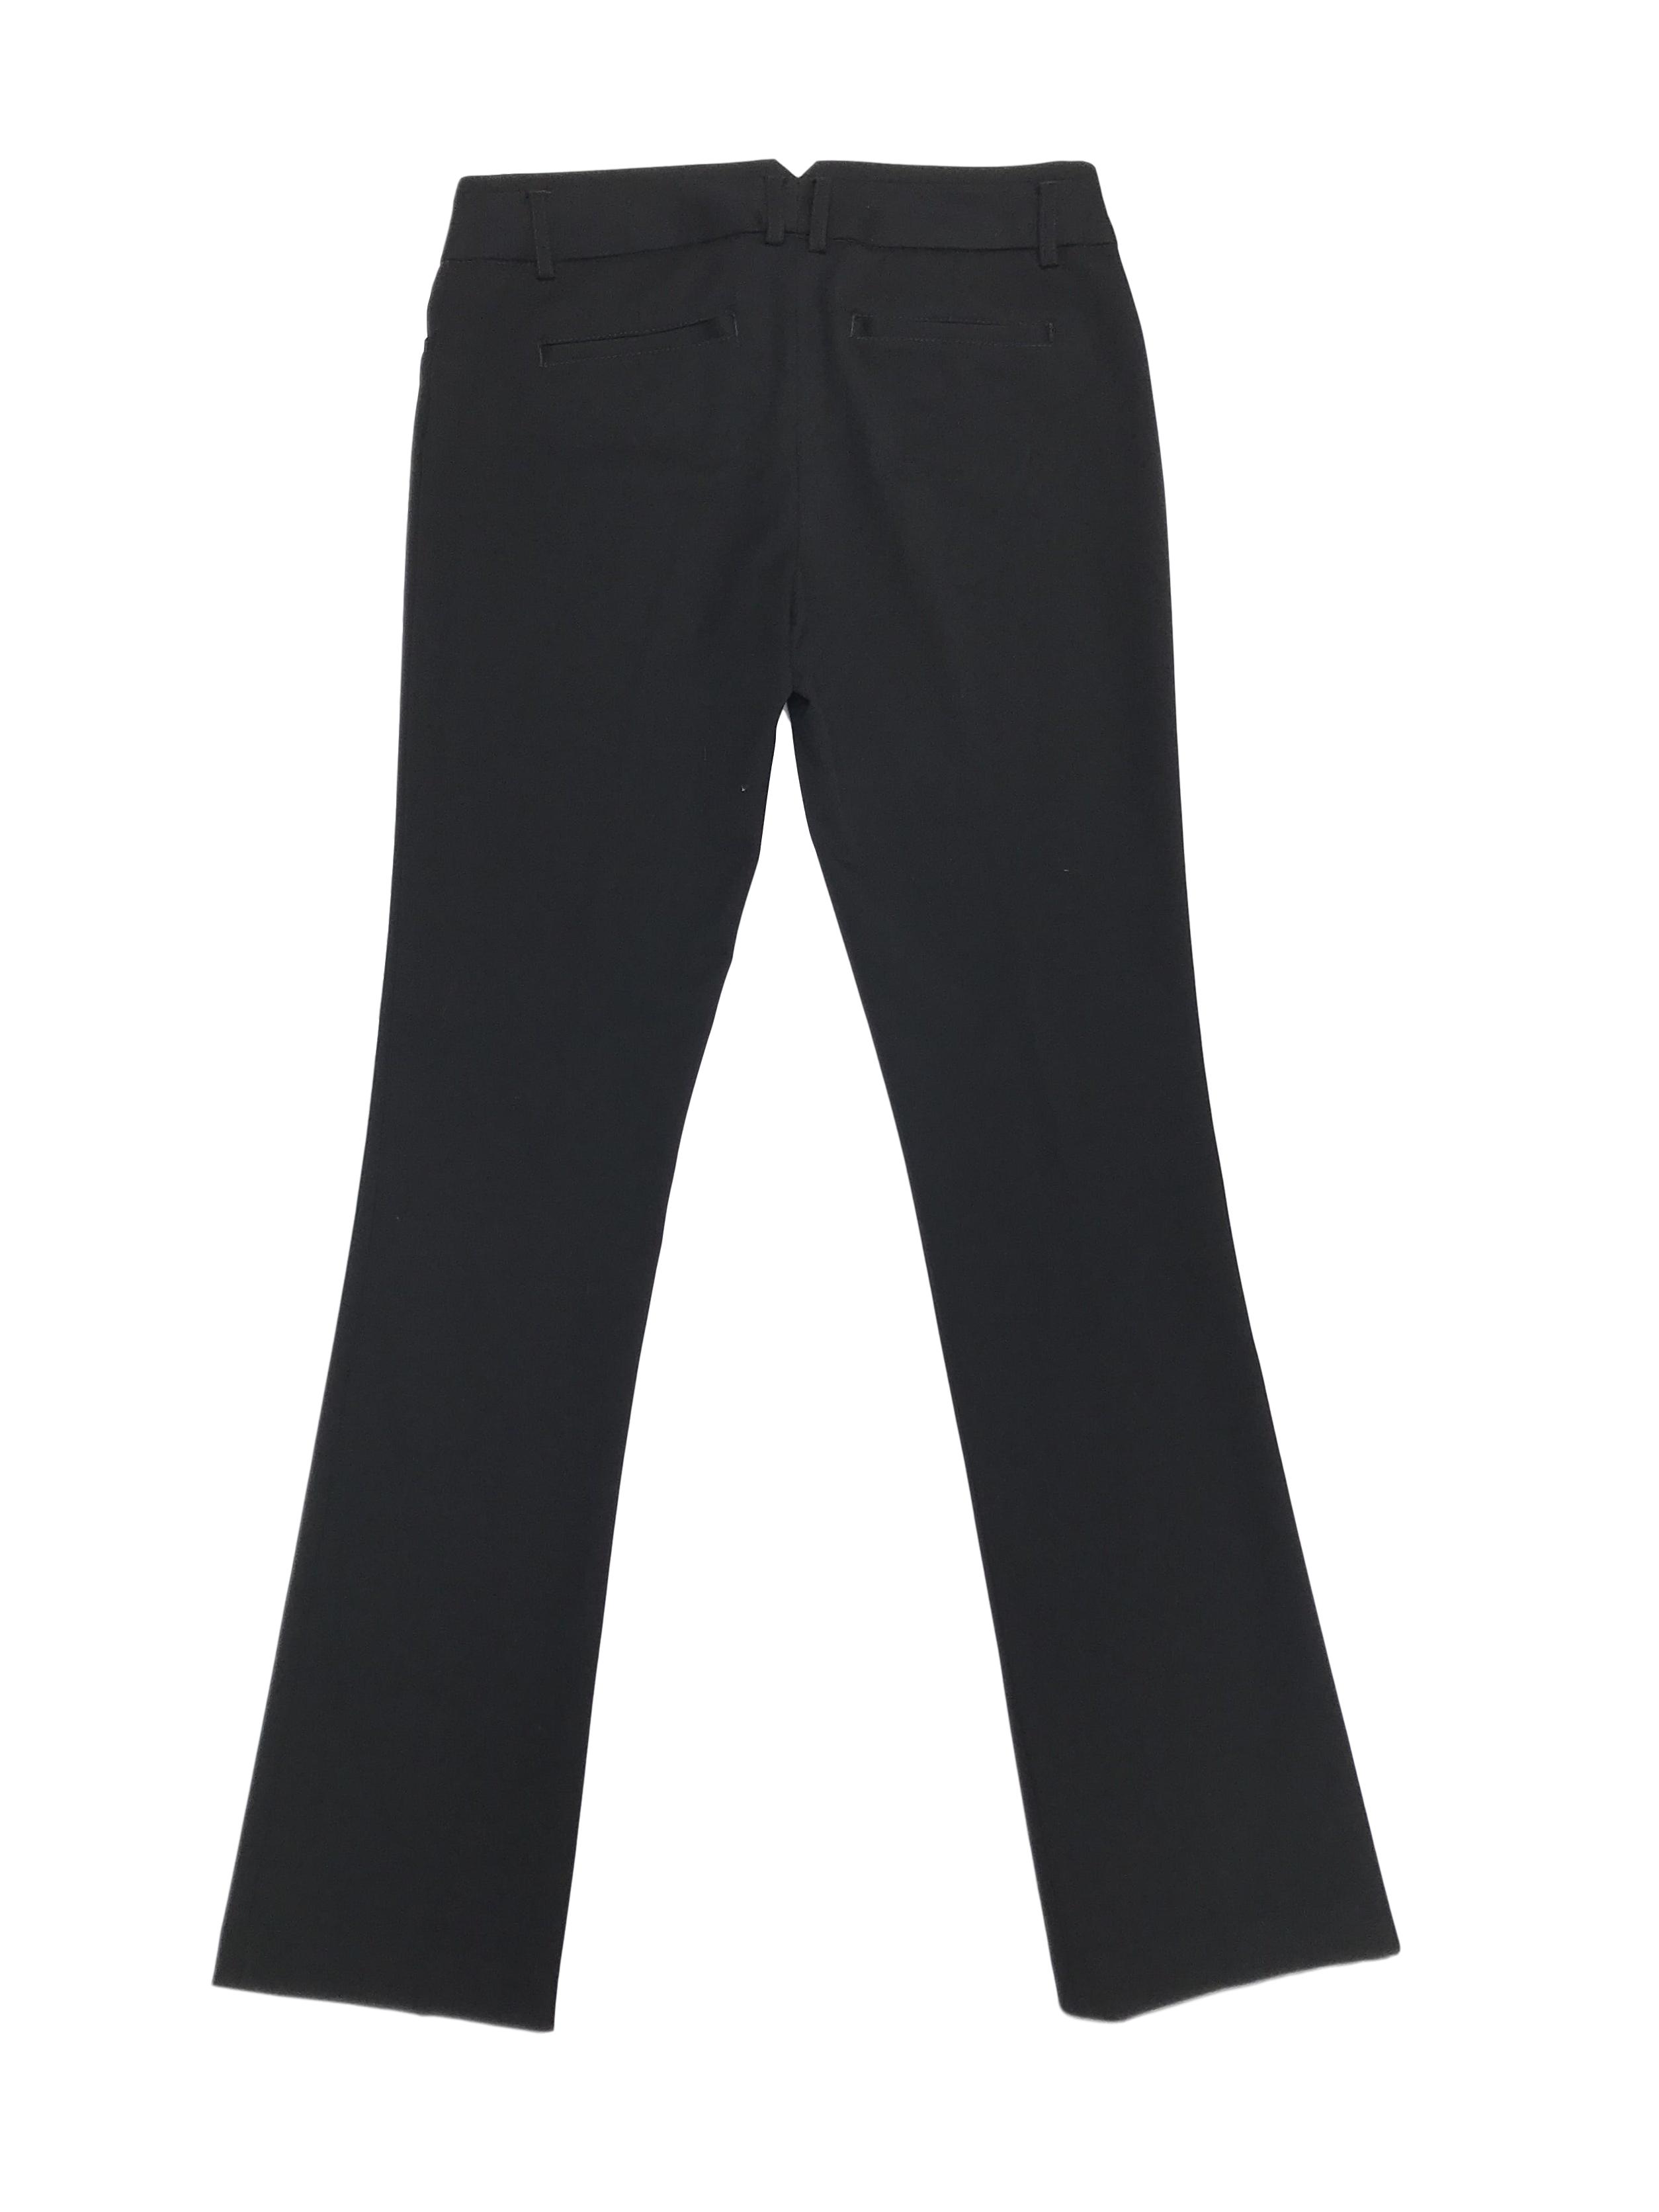 Pantalón de vestir negro Express, pierna recta, bolsillos laterales, ligeramente stretch muy sentador. Precio original S/ 220